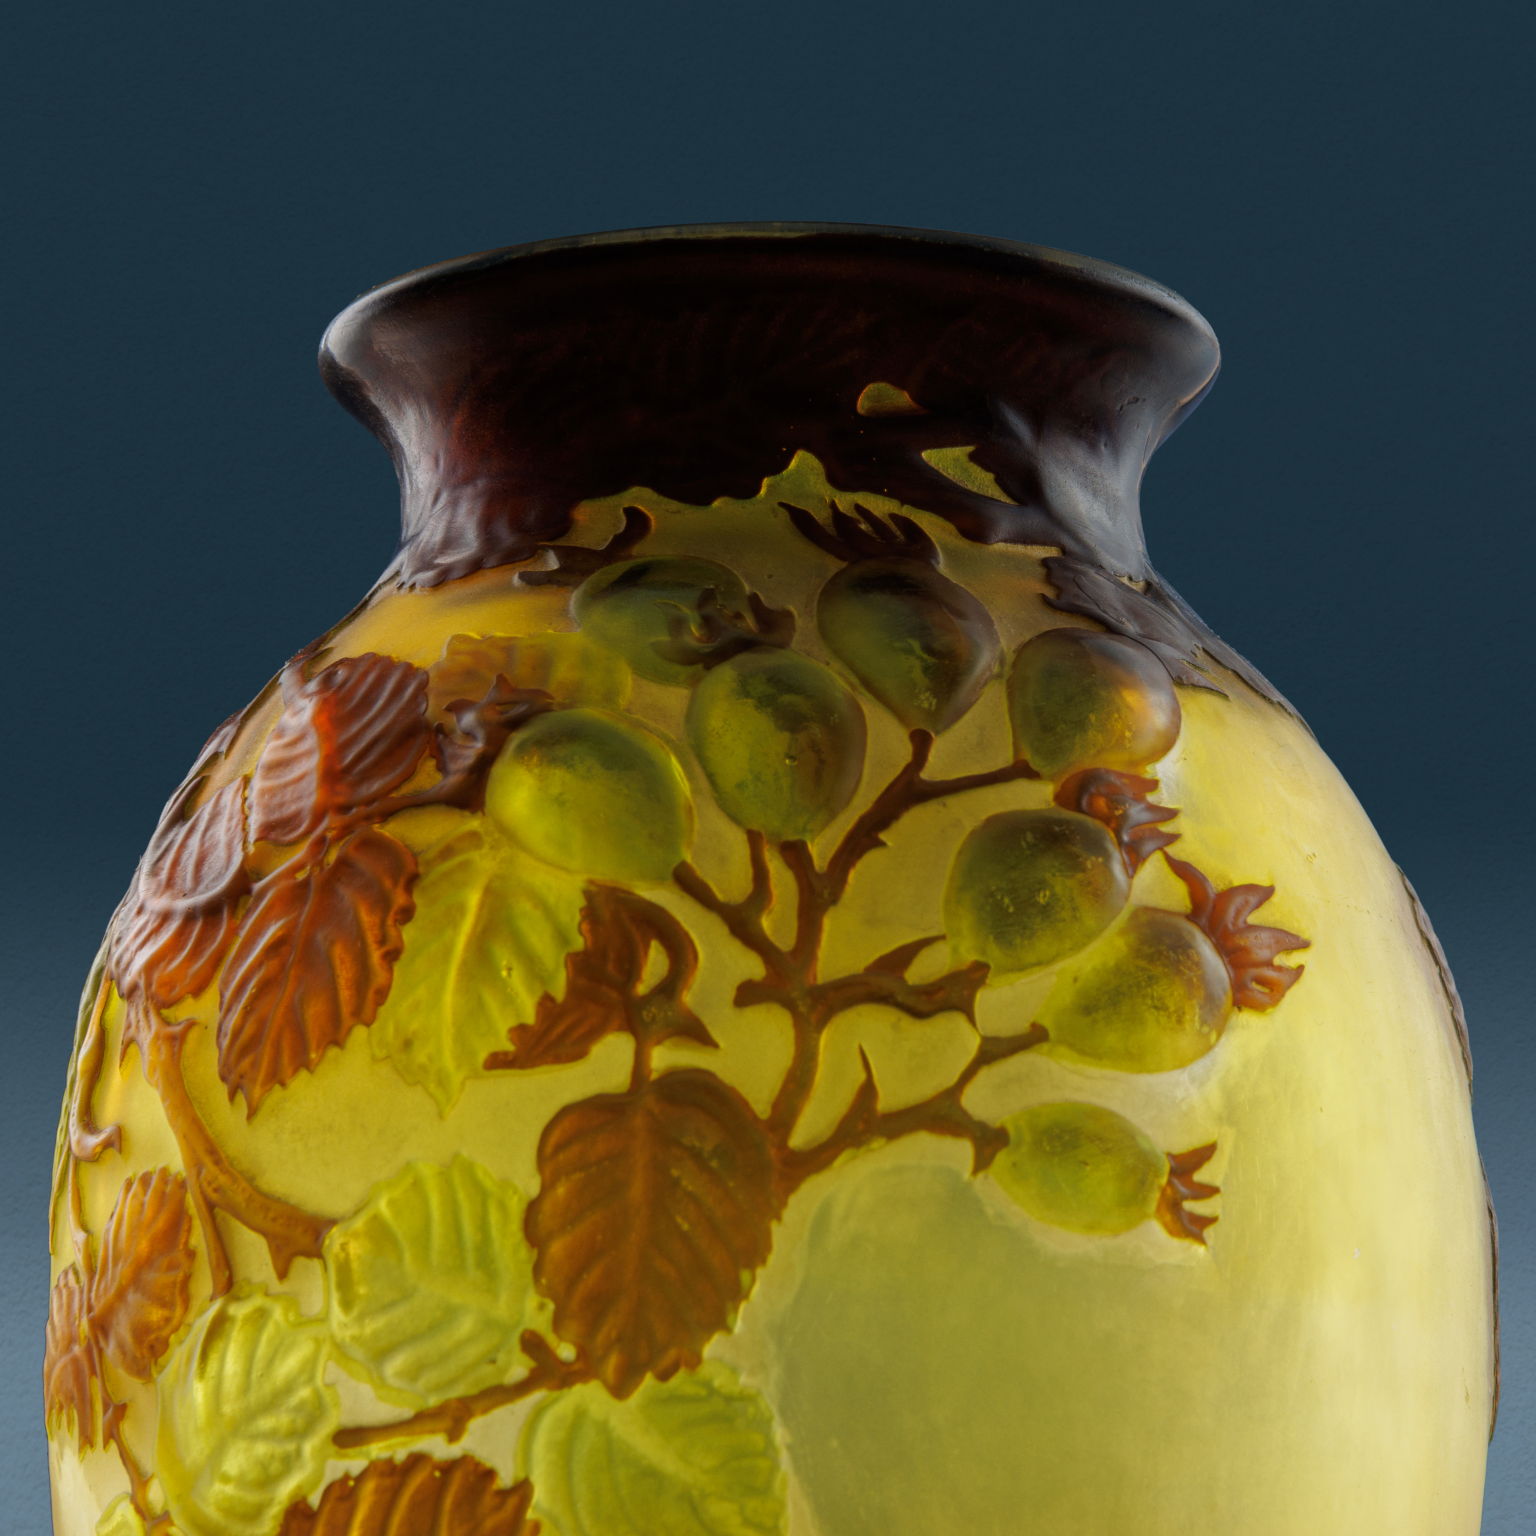 Antiker Gallé Soufflé Vase mit Hundsrose aus Glas 1925